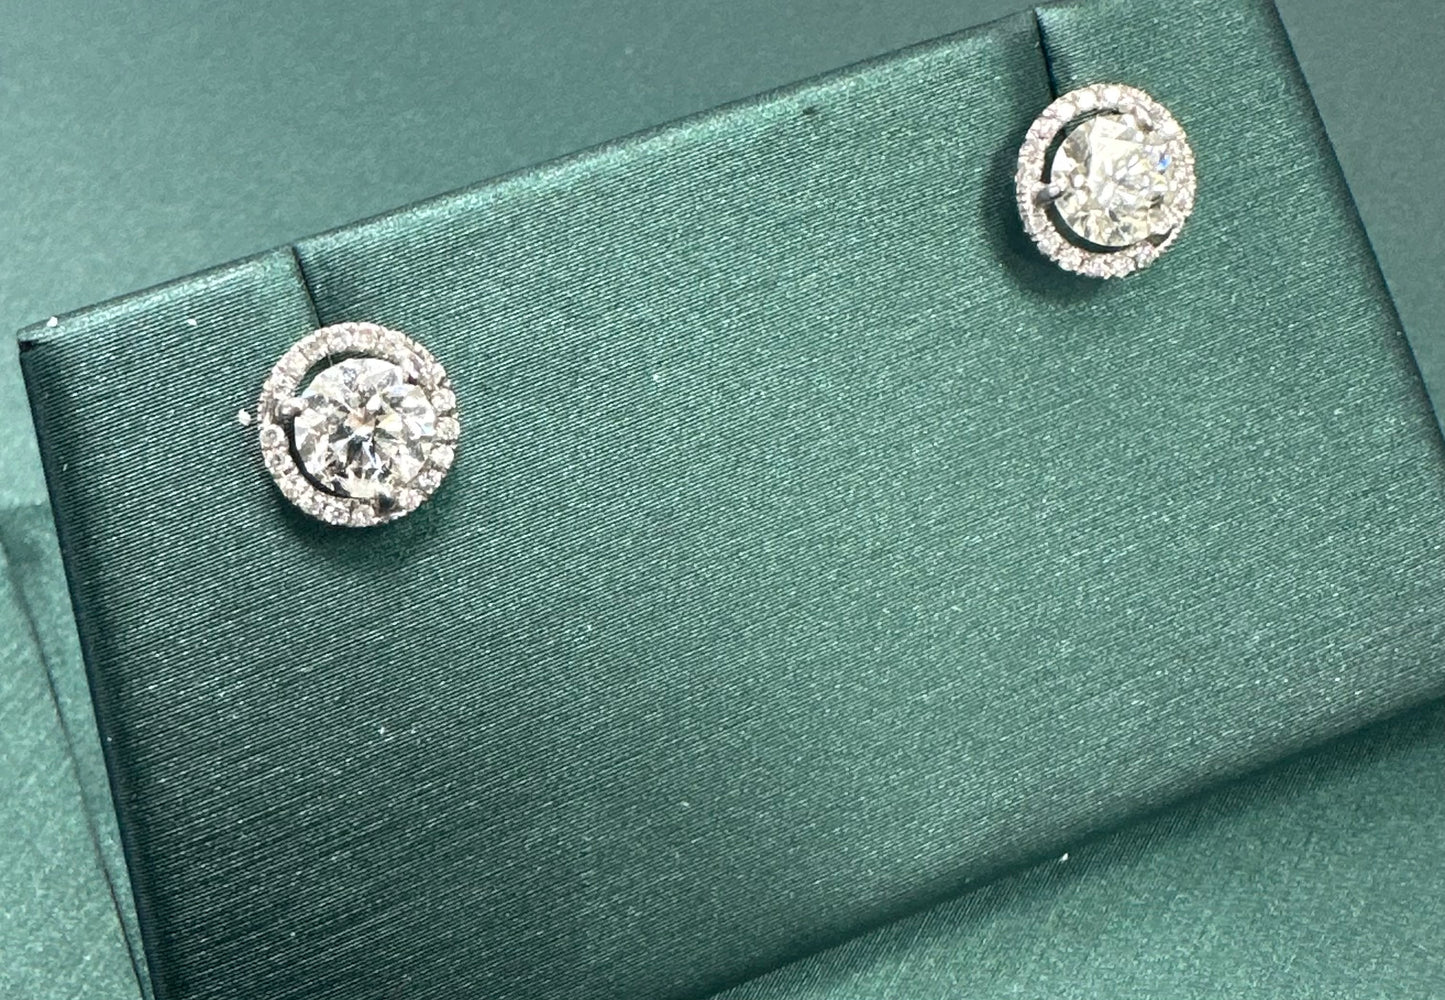 Diamond Halo earrings 1.51 ct